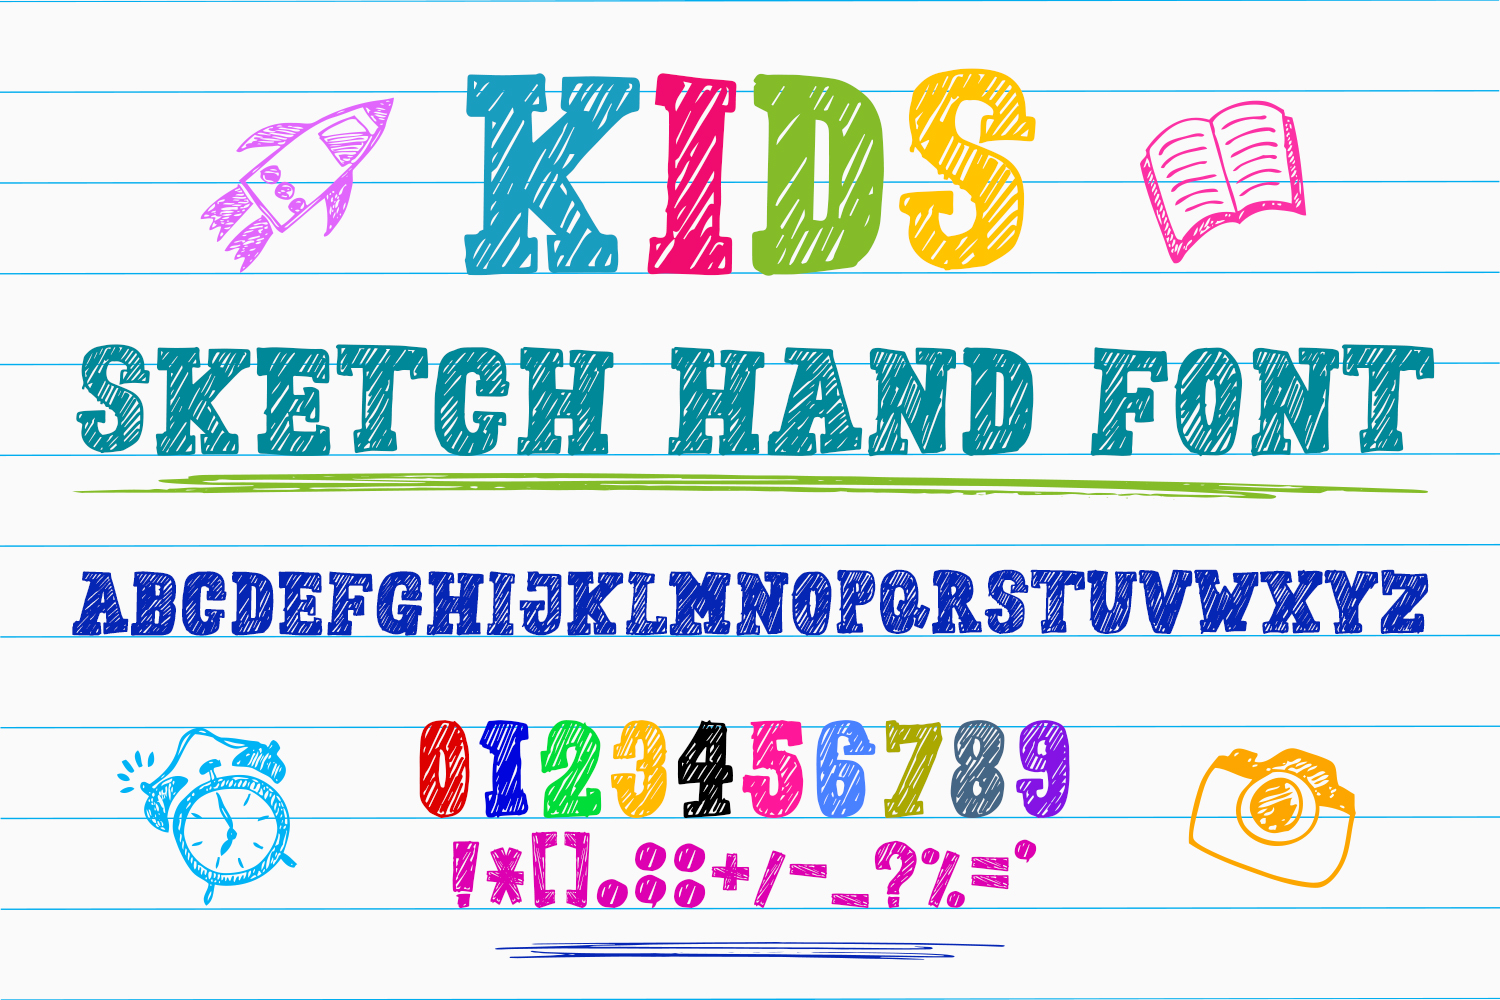 Kids Sketch Hand Font